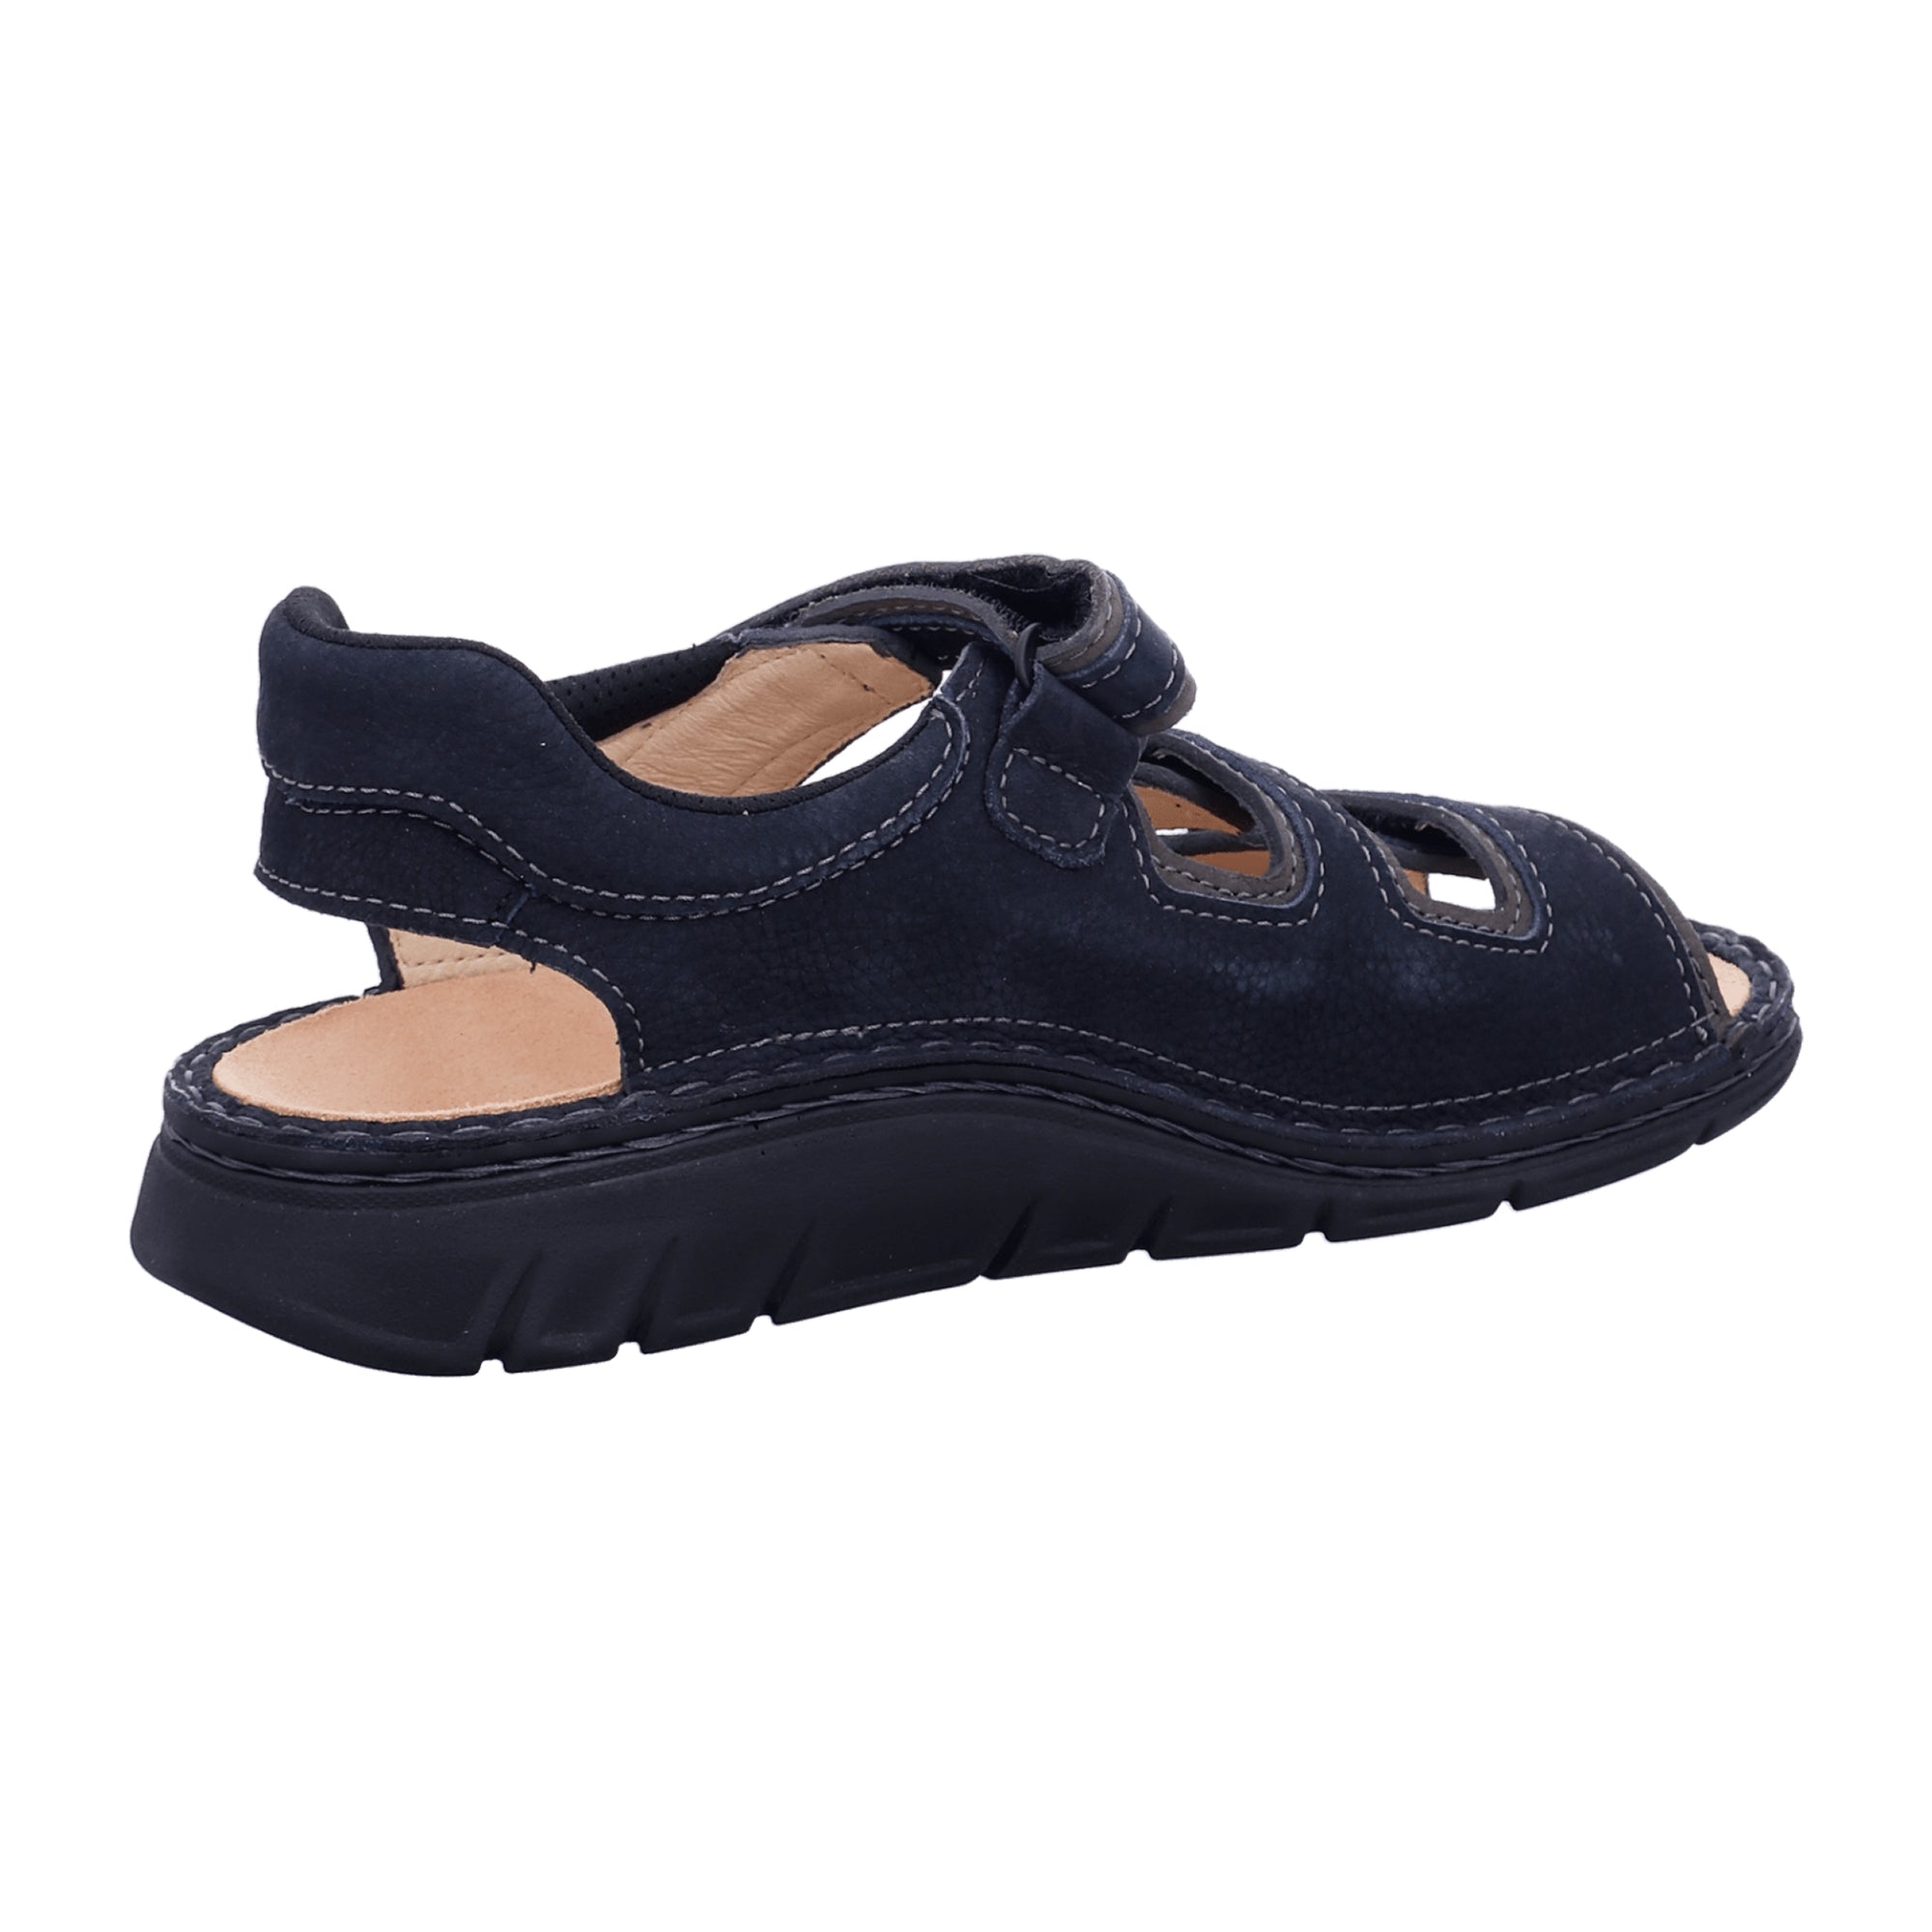 Finn Comfort Casablanca Men's Shoes - Stylish Blue Leather Comfort Sneakers